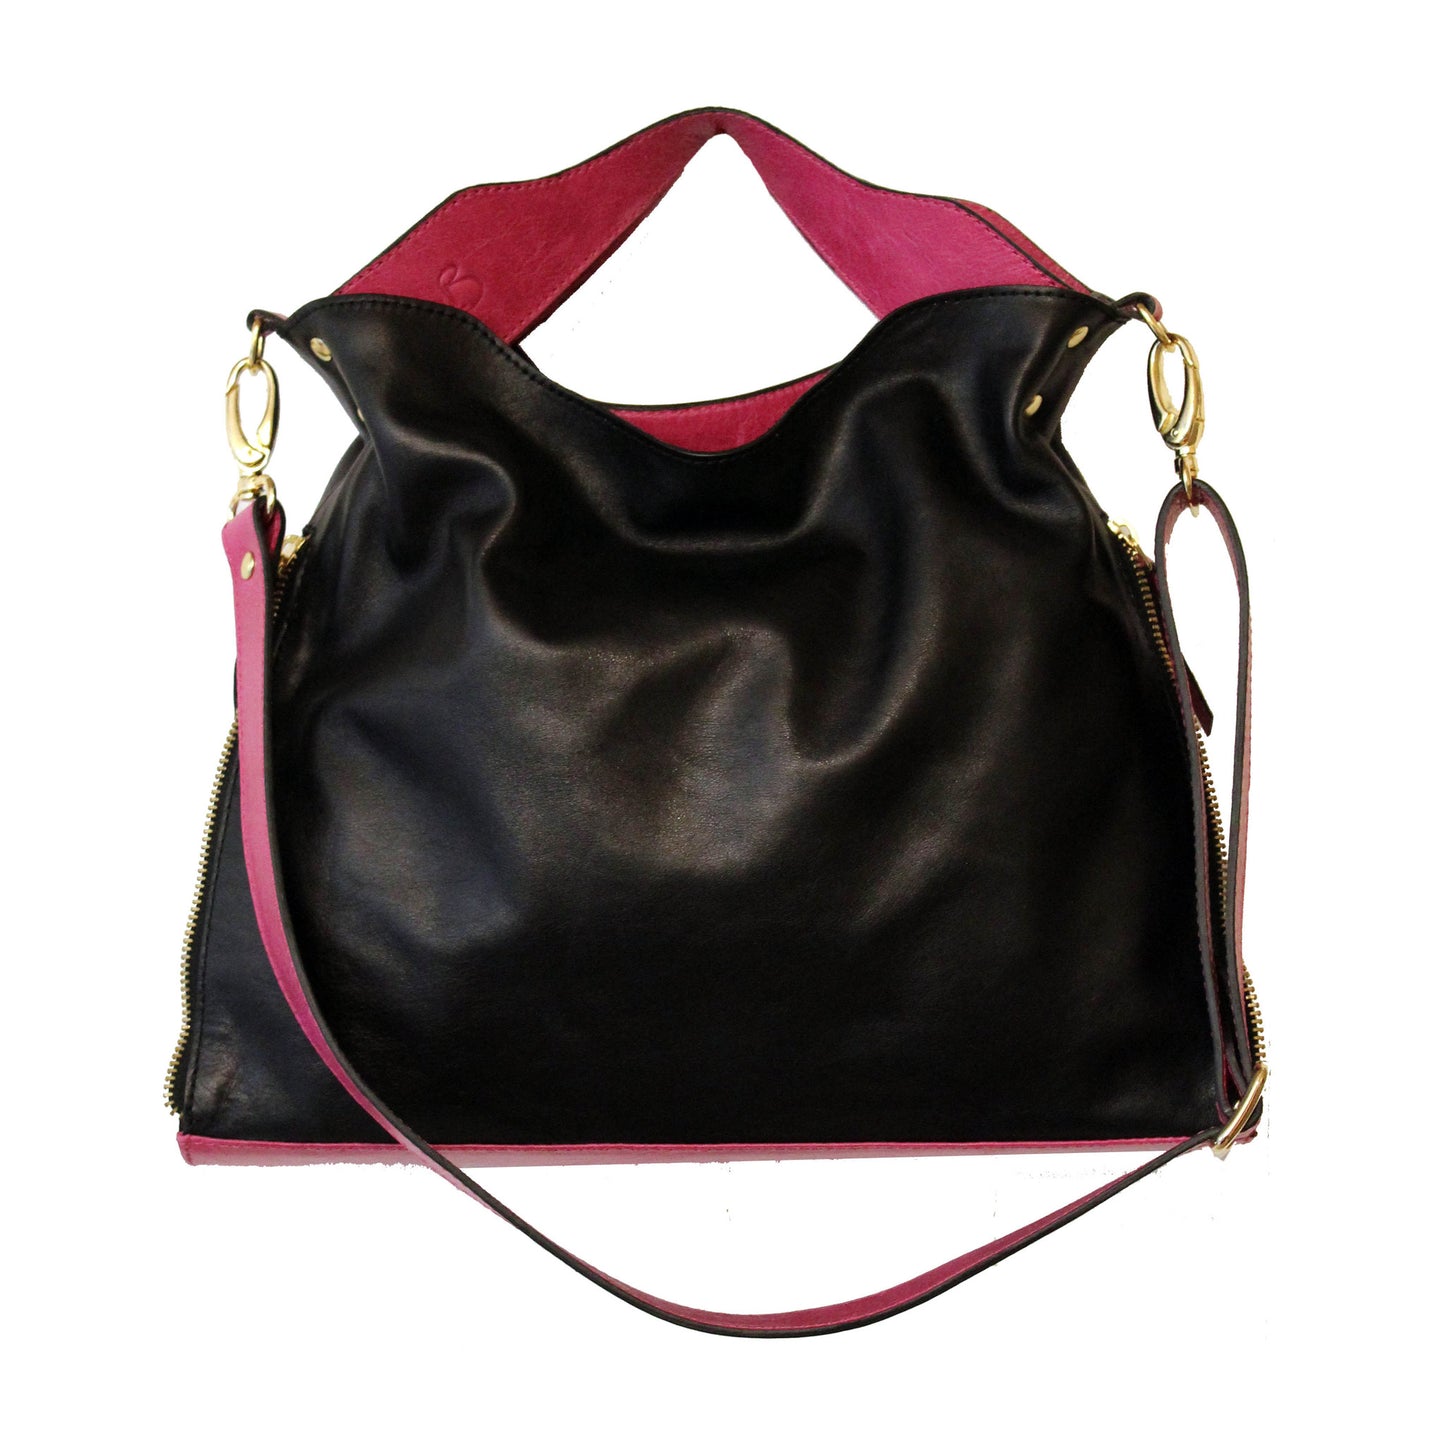 Riche - Black/Fuchsia black leather handbag